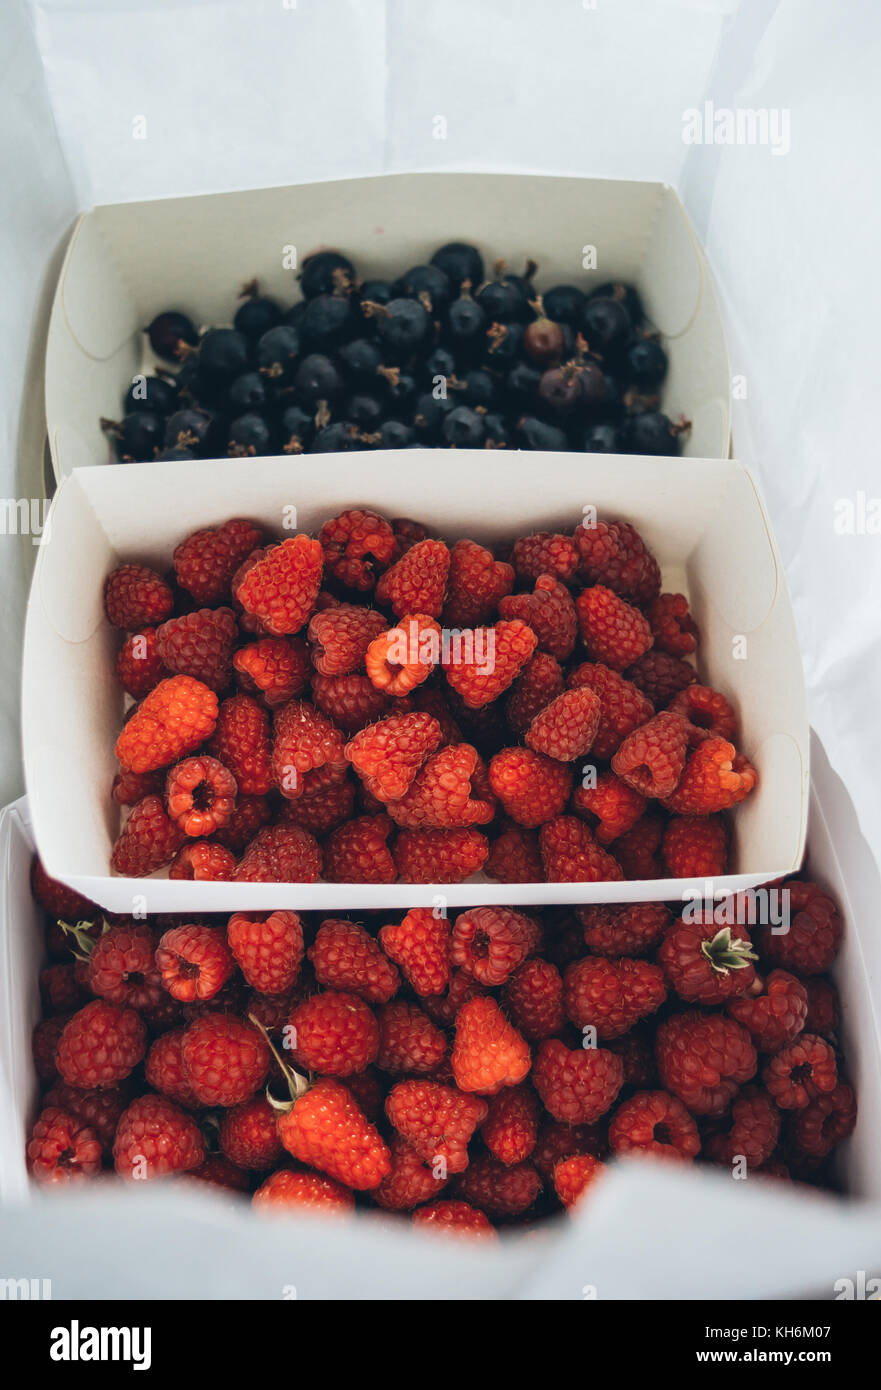 Raspberries and josta berries fruit in paper boxes Stock Photo